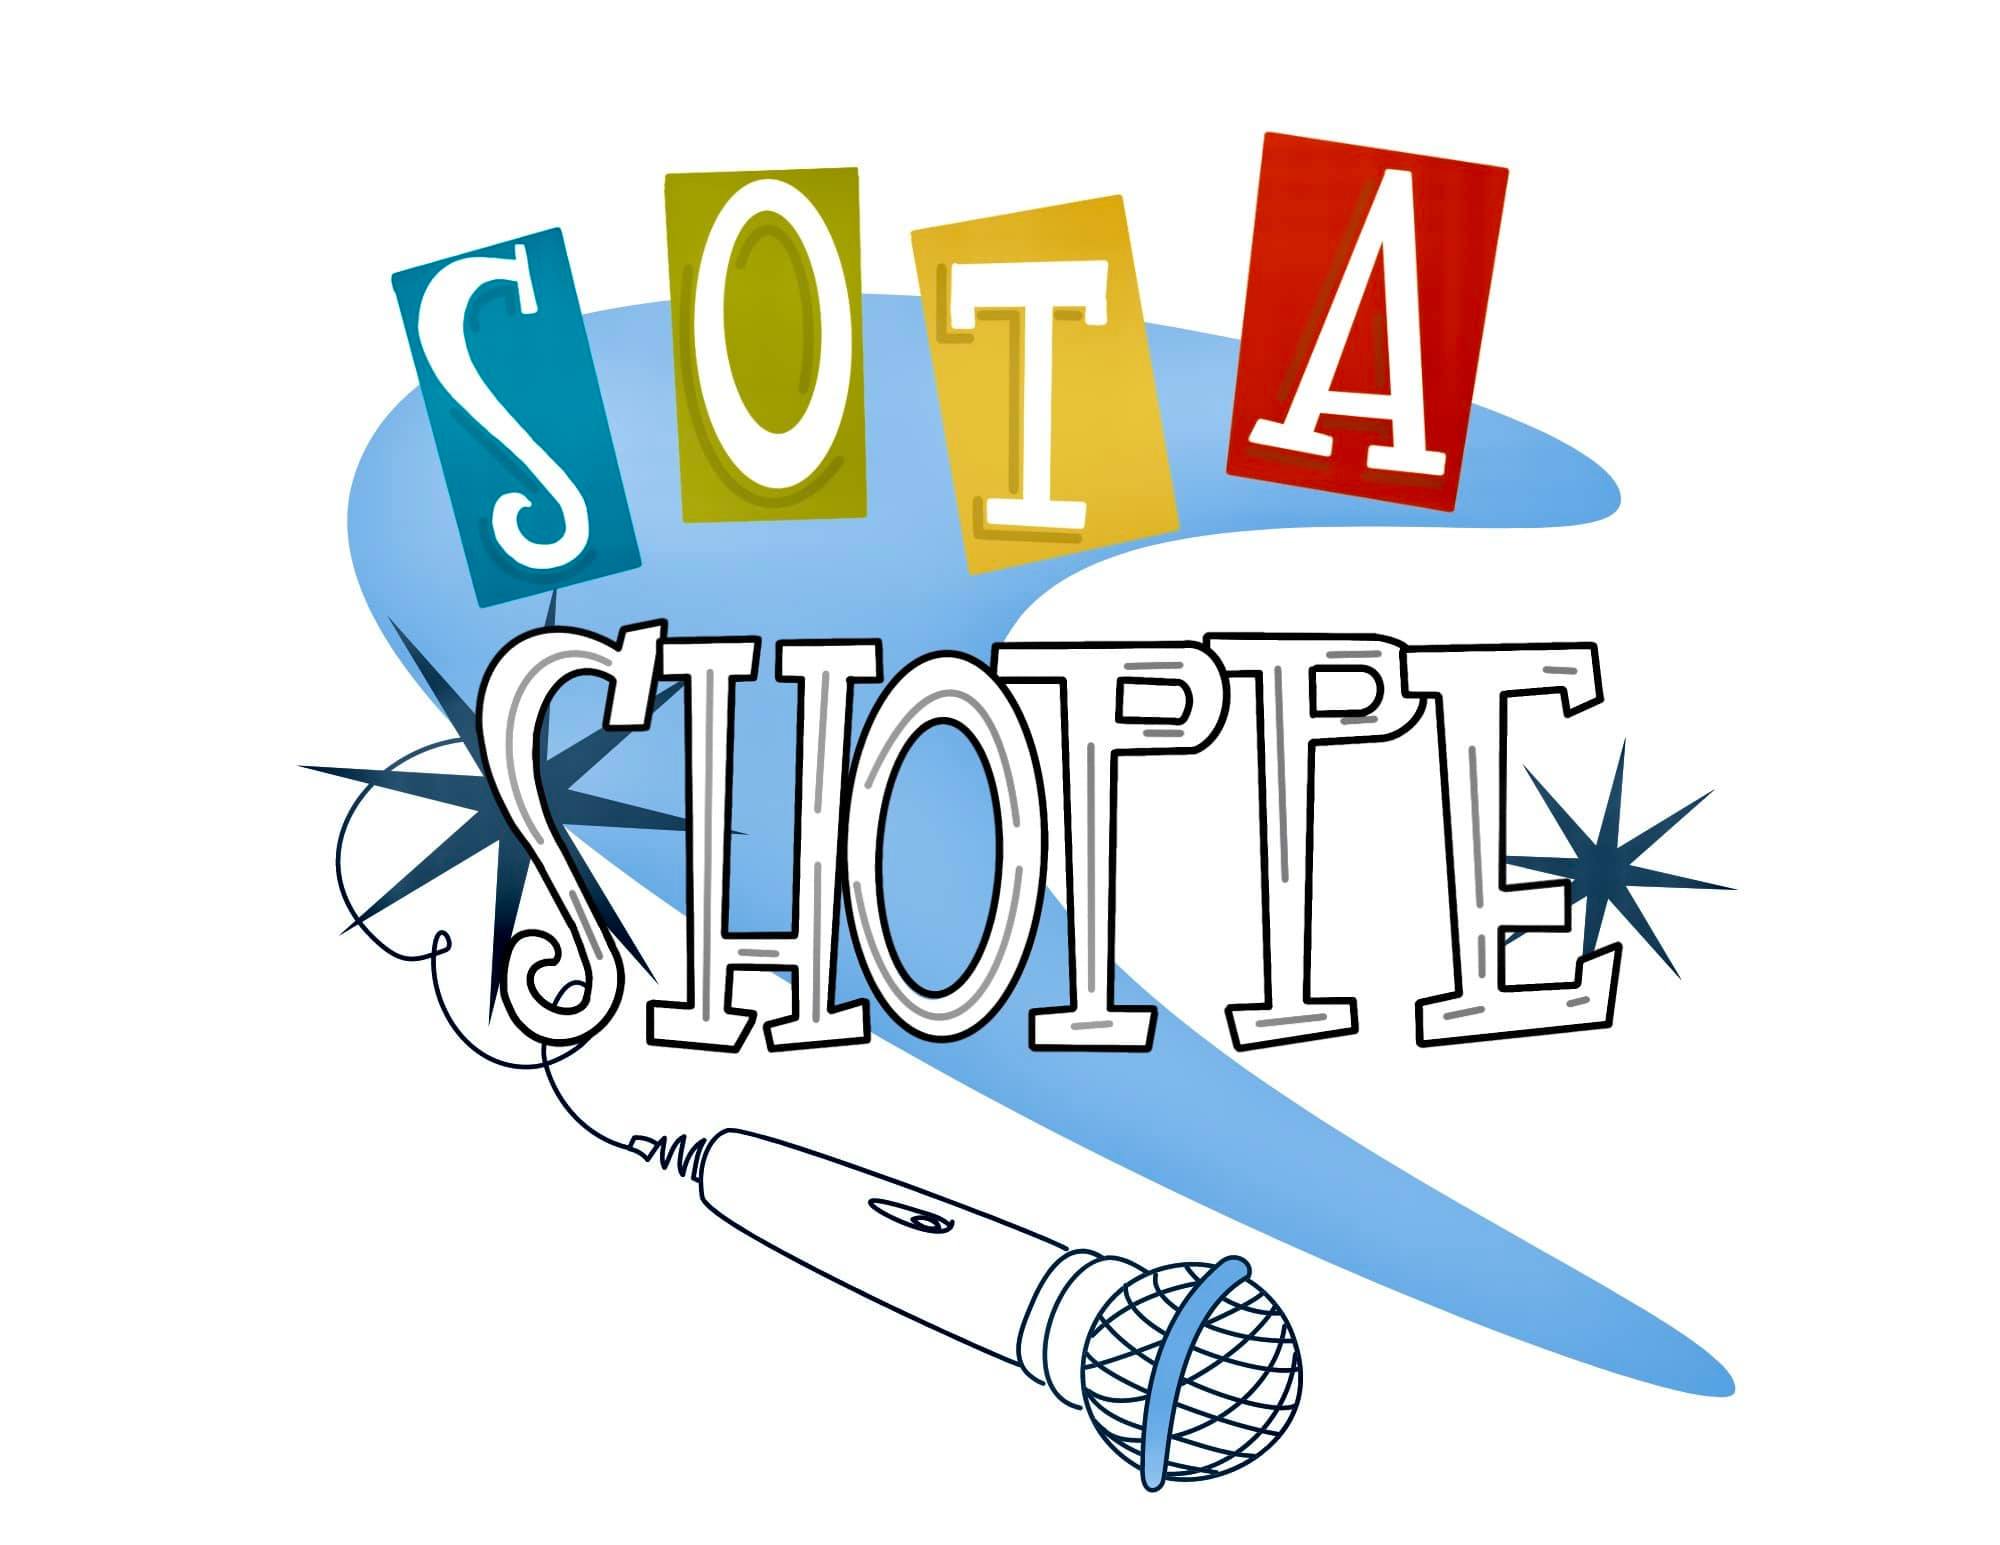 SoTA Shoppe